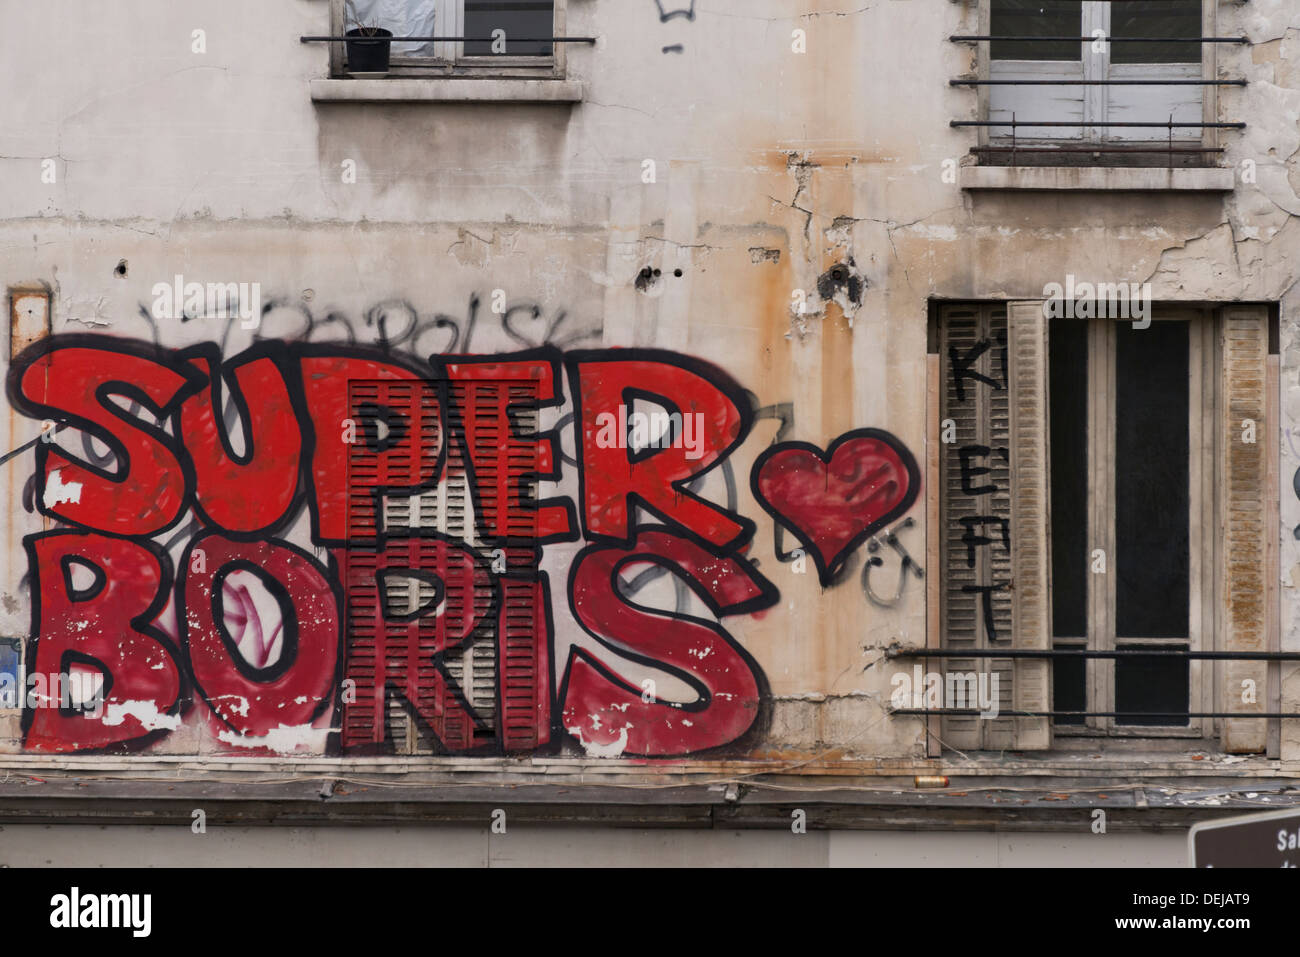 Graffiti on building in Paris, France Stock Photo